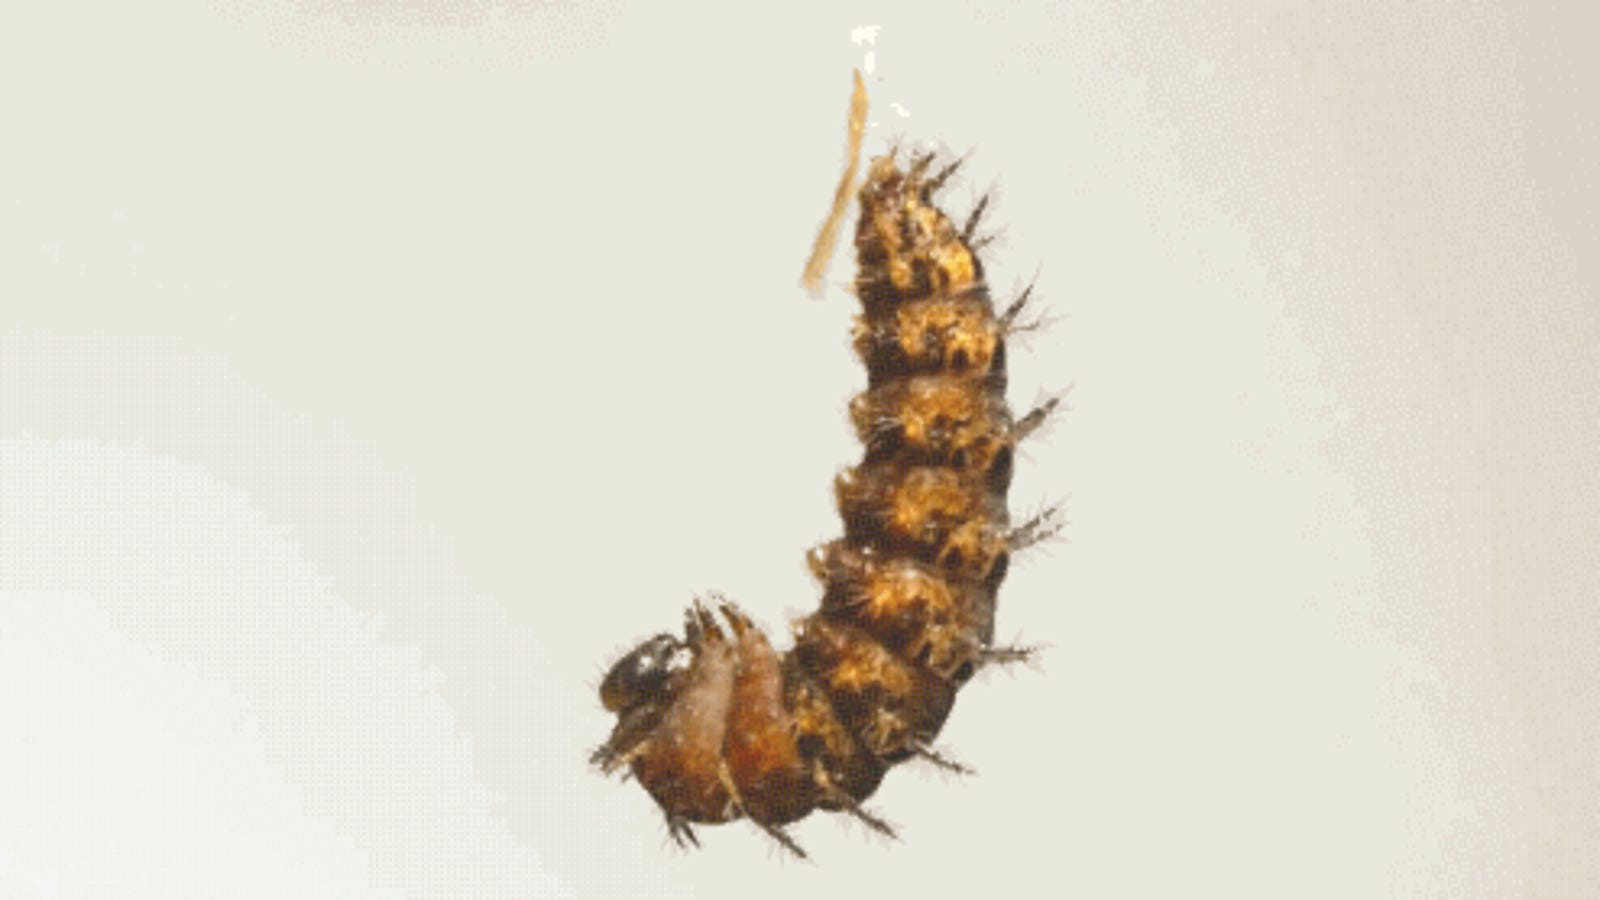 caterpillar metamorphosis